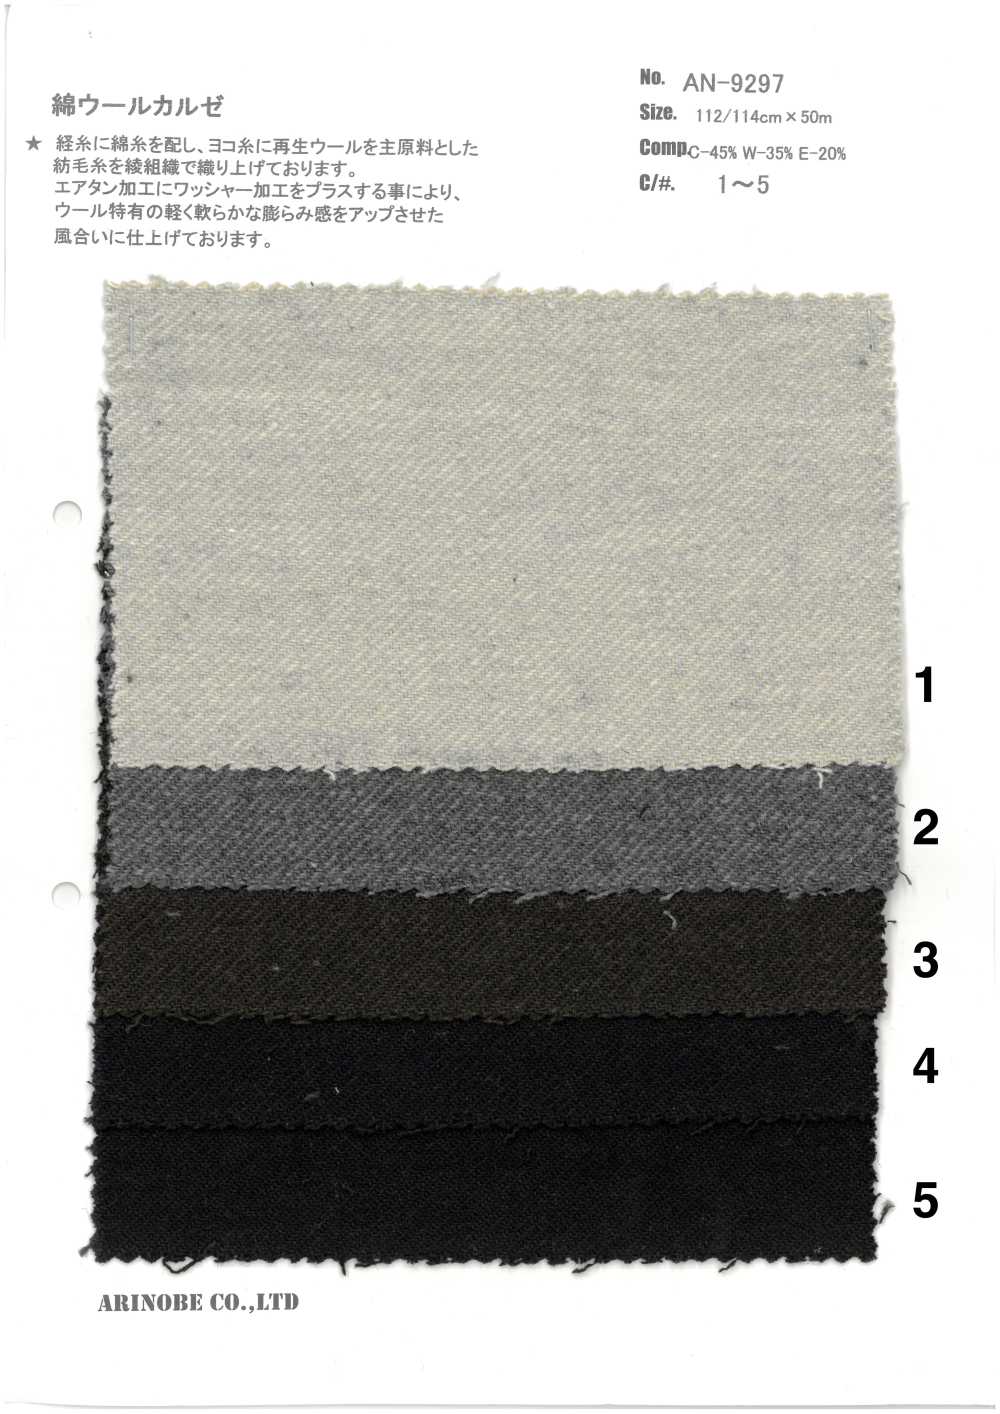 AN-9297 Algodão Lã Calze[Têxtil / Tecido] ARINOBE CO., LTD.